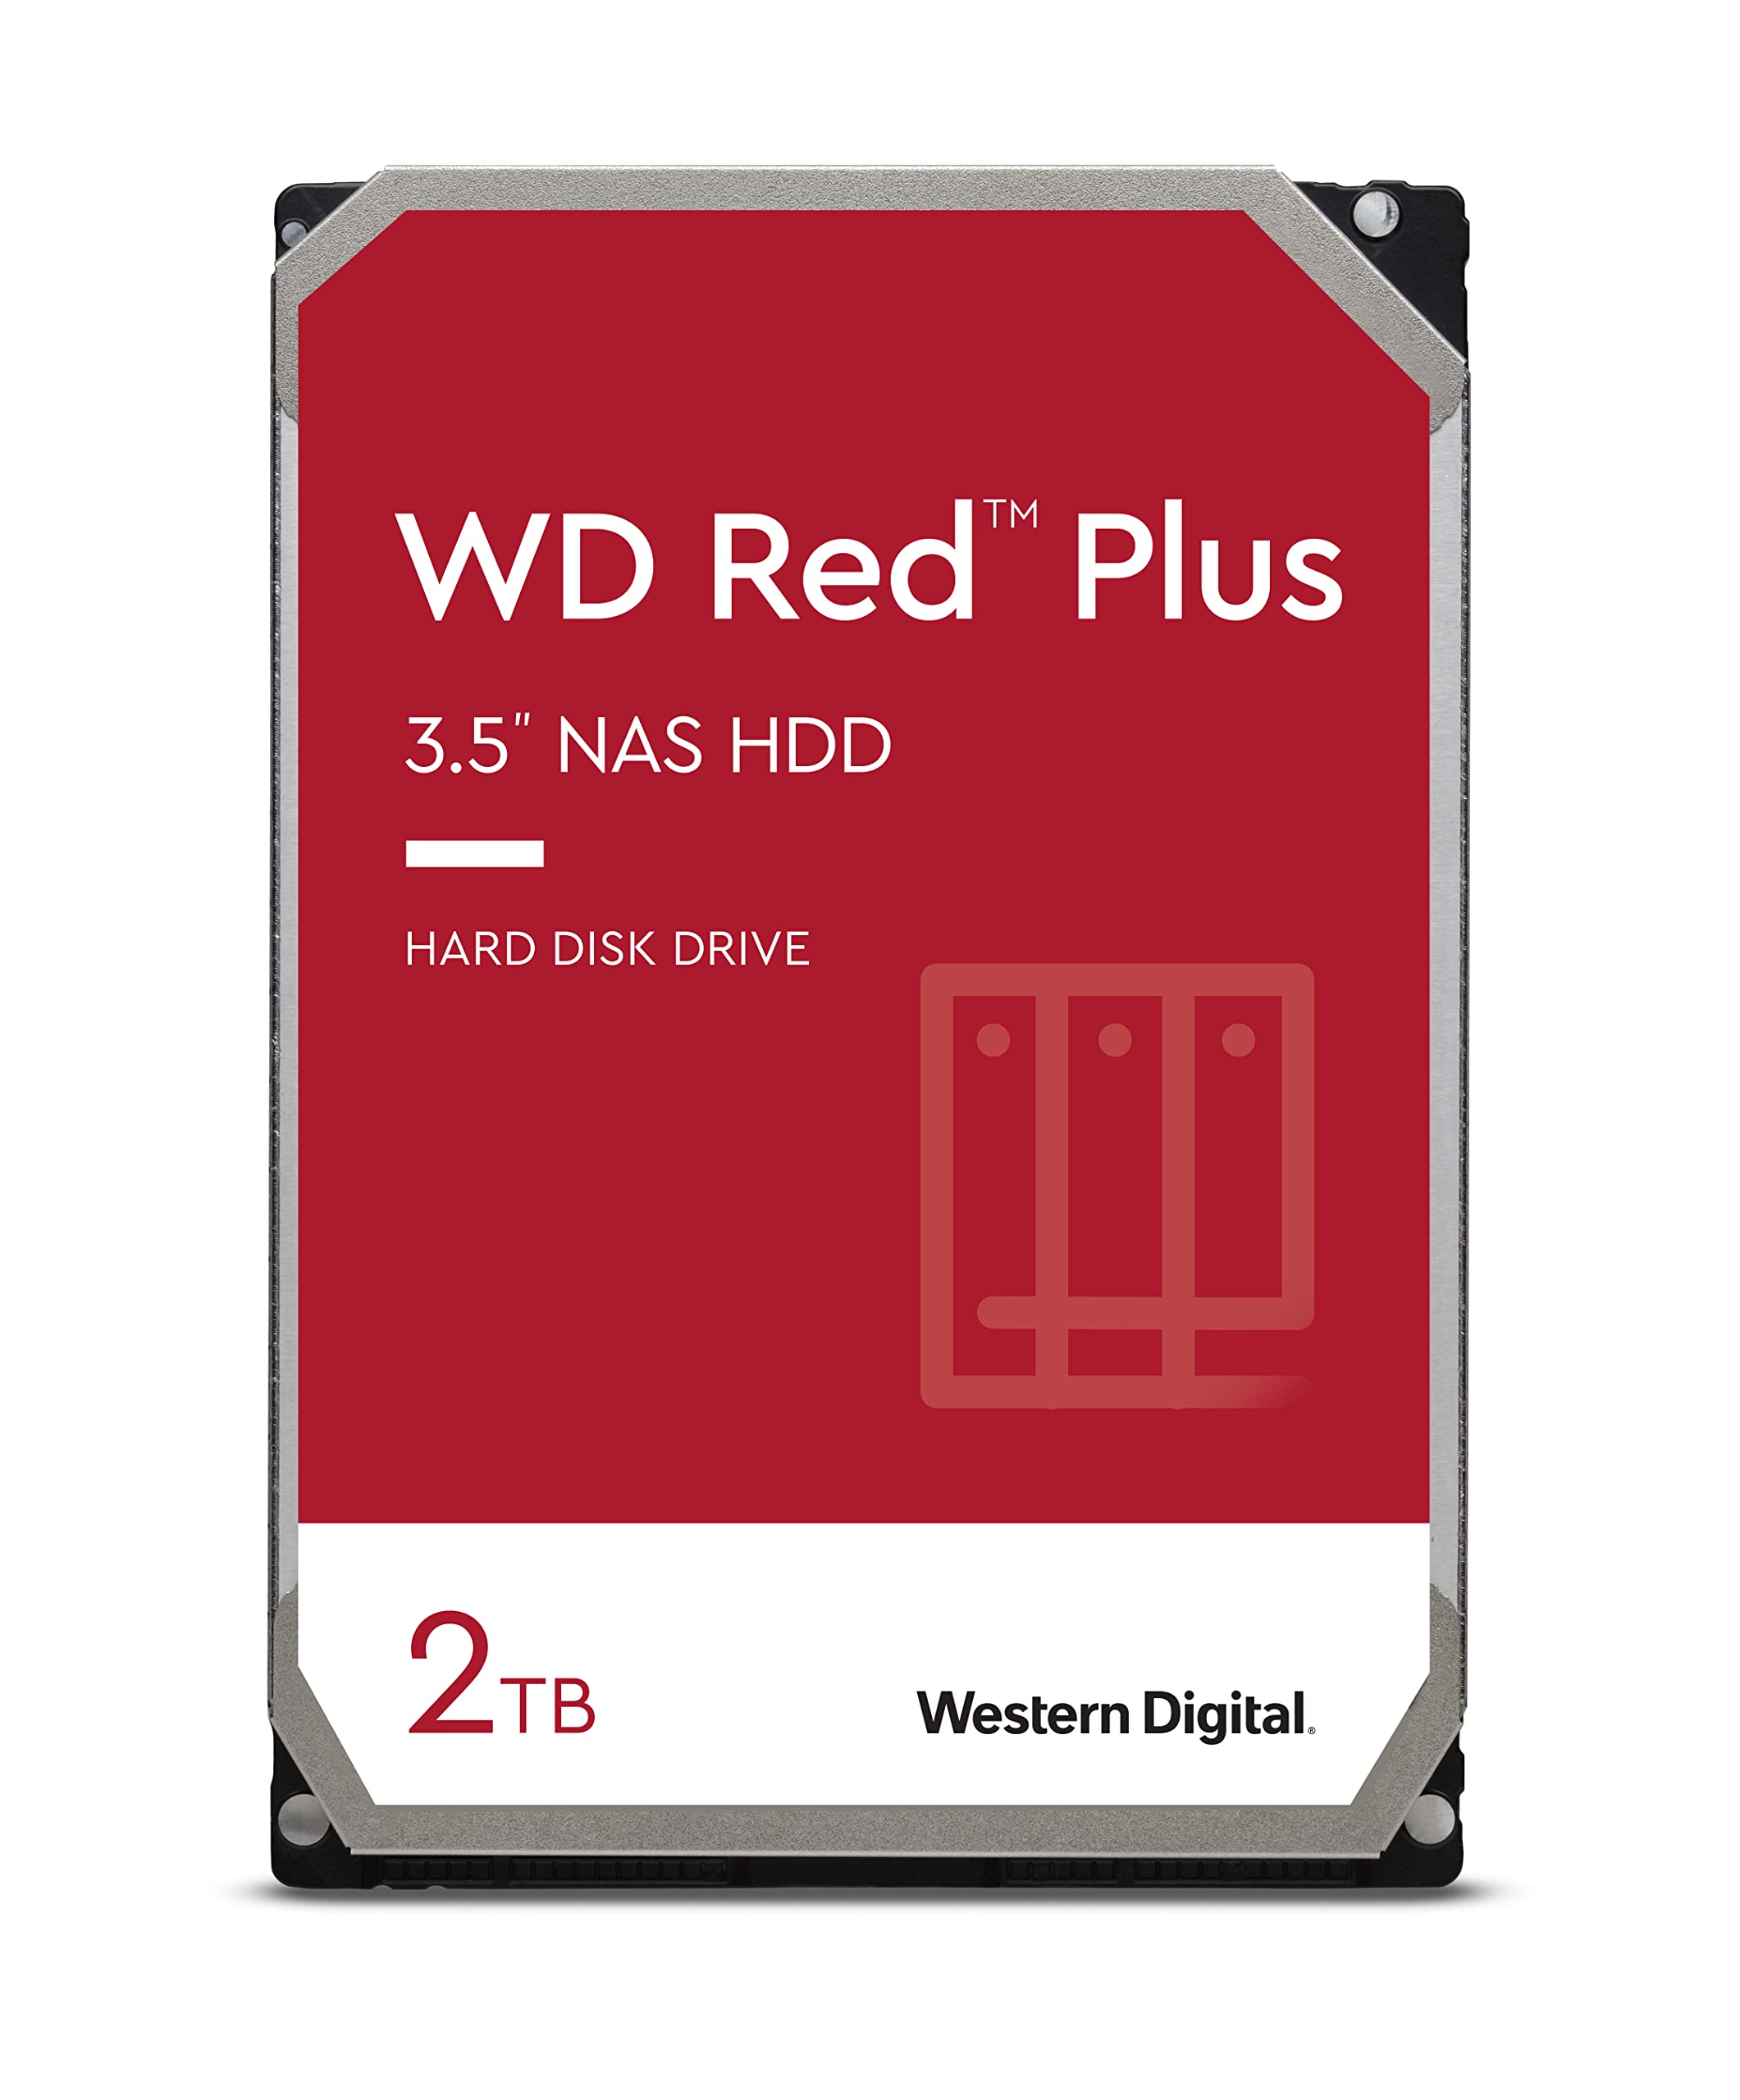 WD RED PLUS 3.5P 2TB 128MB (DK)